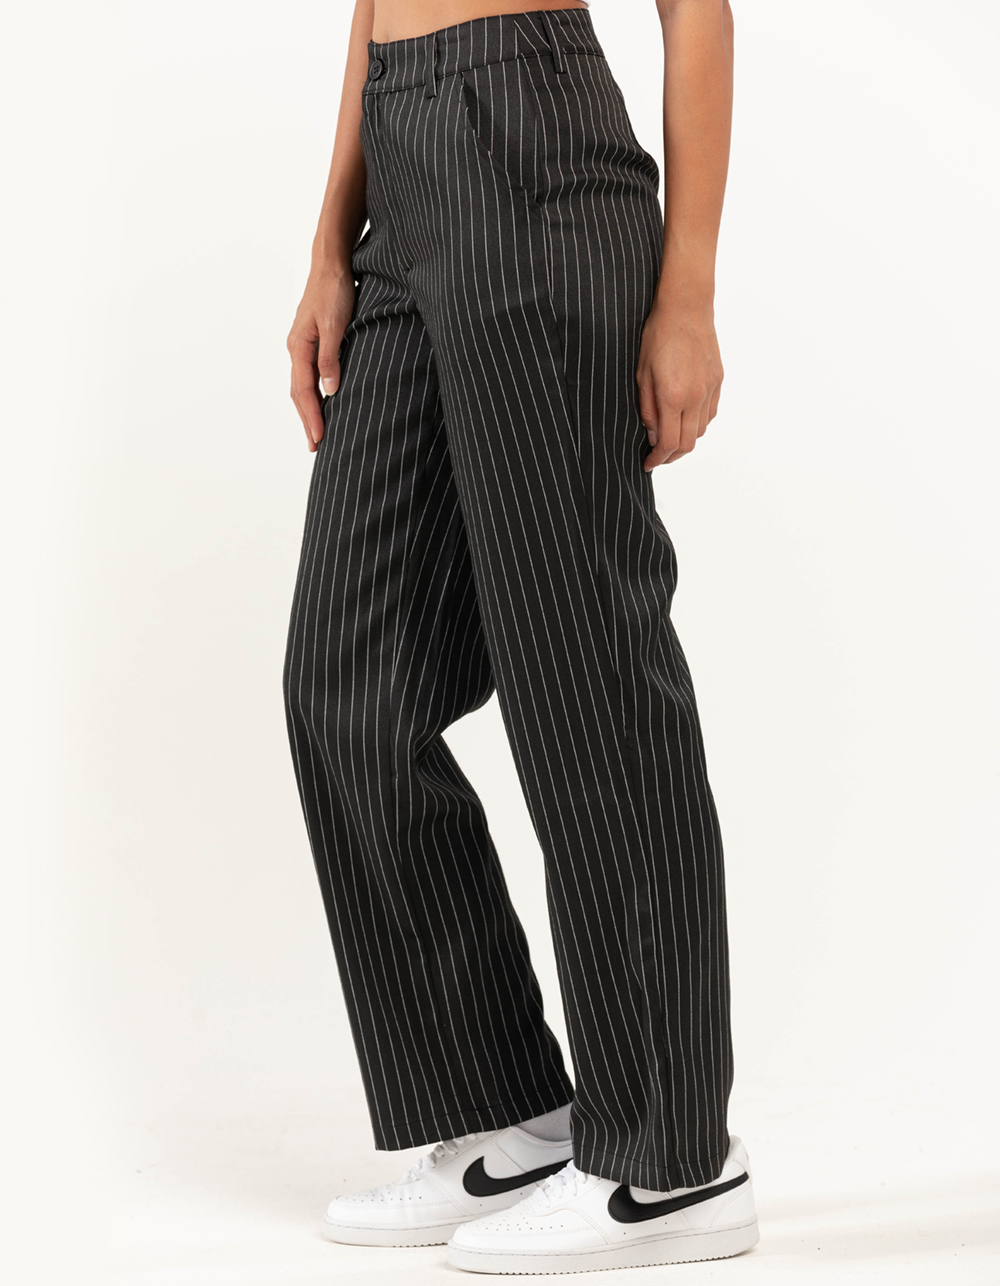 RSQ Womens Pinstripe Pants - BLK/WHT